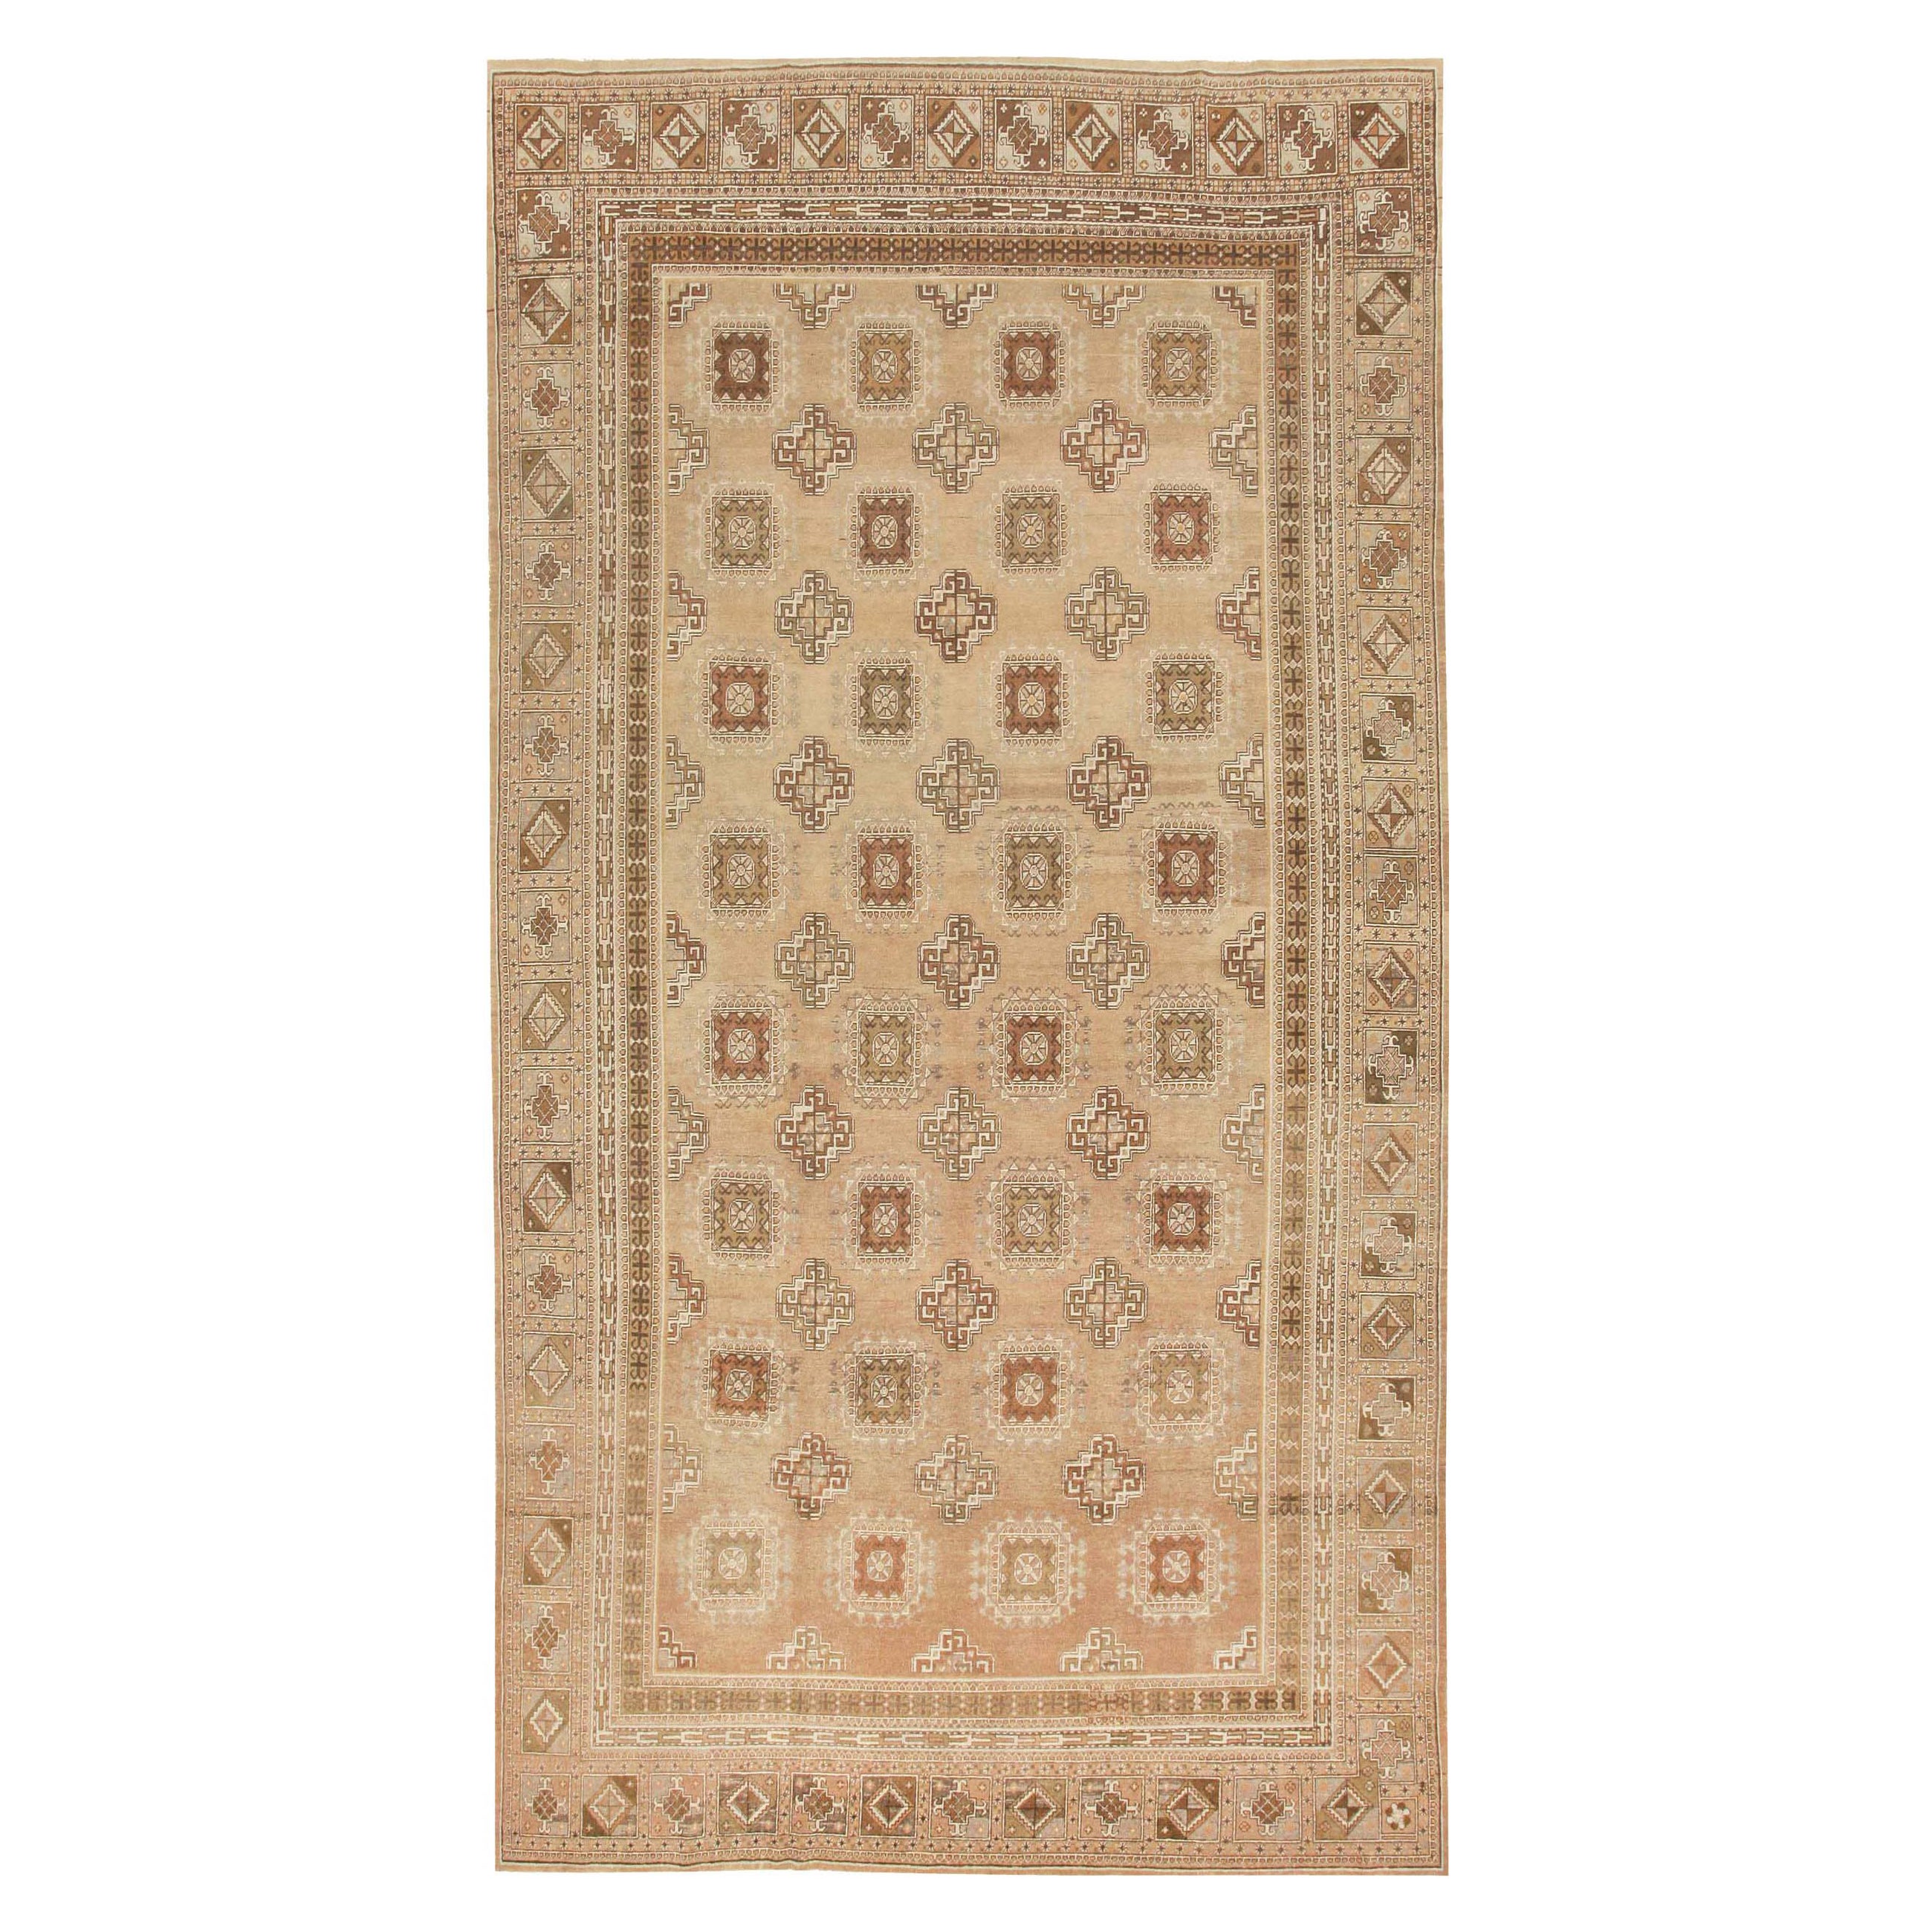 Antique Khotan Carpet. Size: 9 ft x 17 ft 2 in